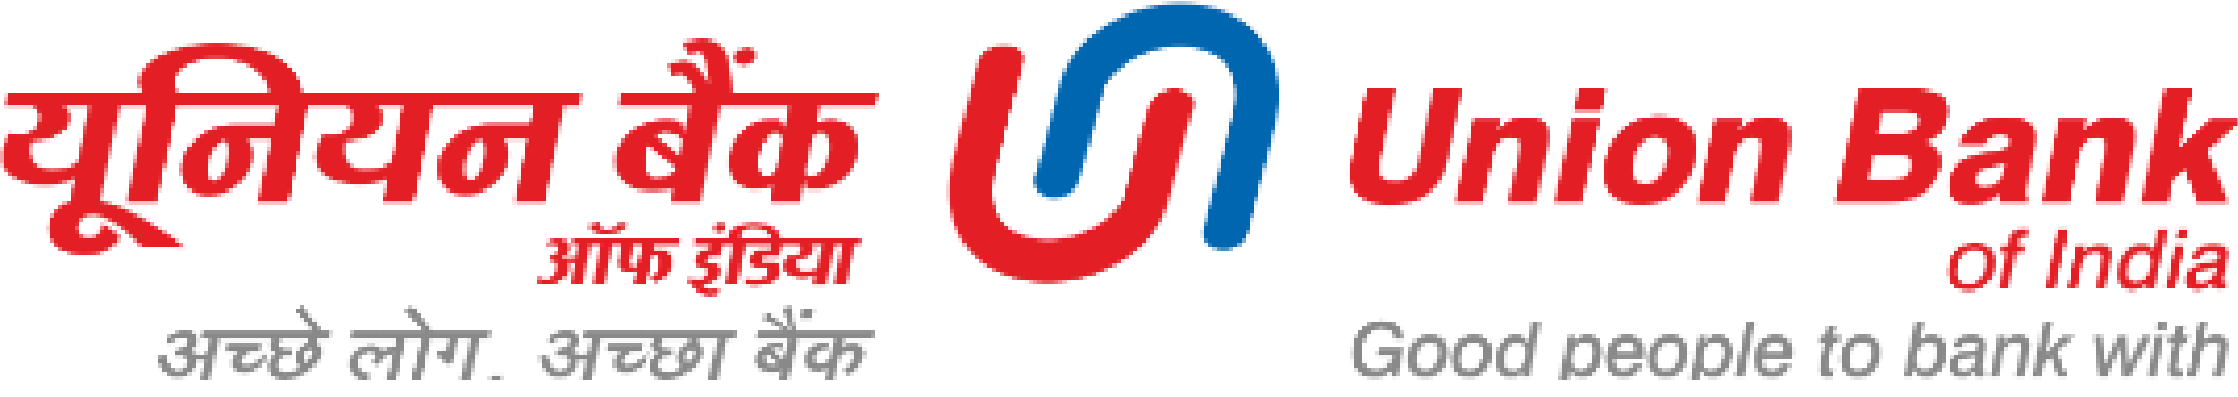 Union Bank Logo Png